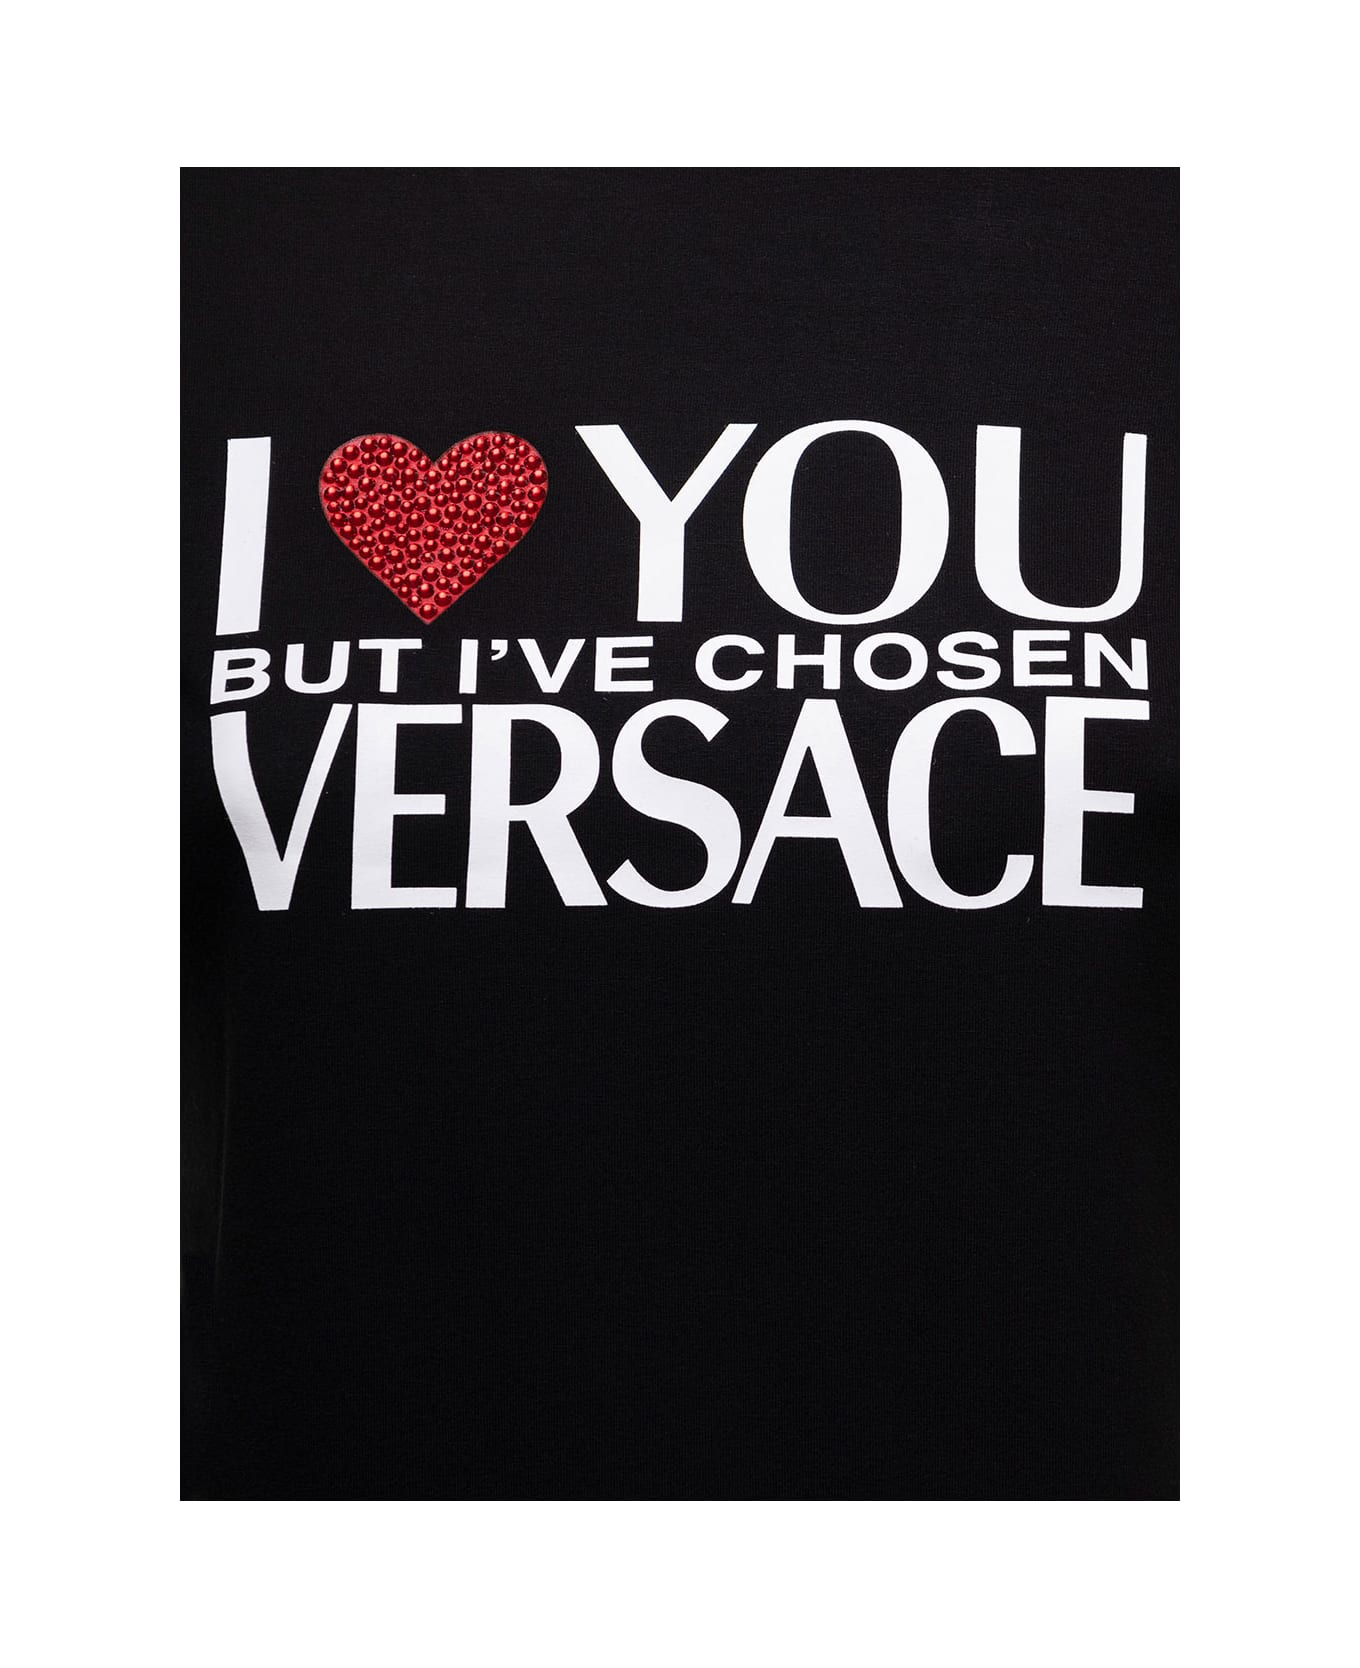 Versace I Love You Versace Tshirt - Black